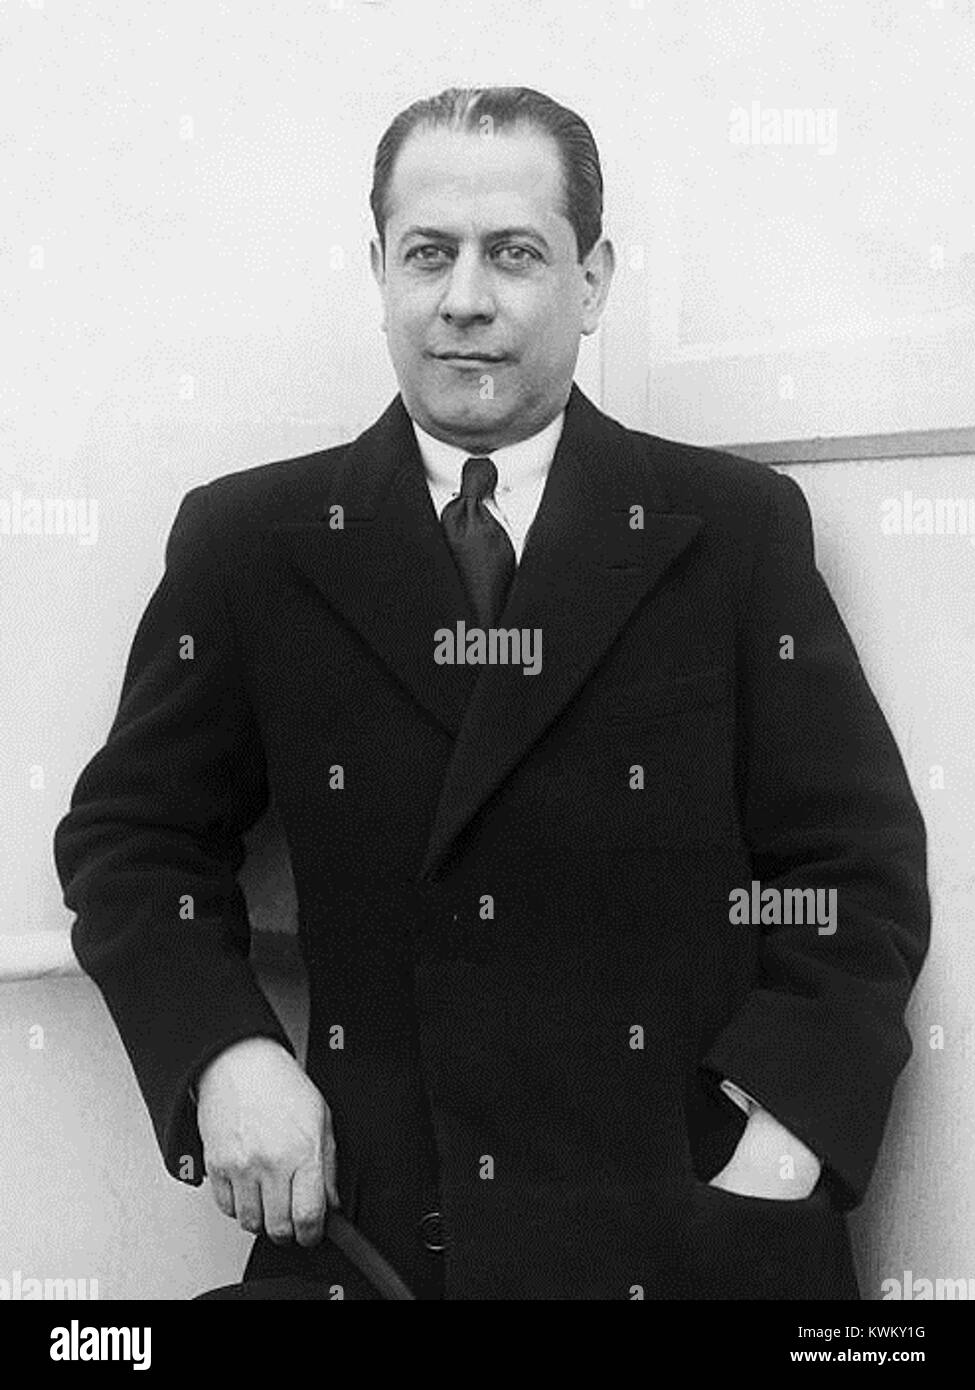 Capablanca vs Alekhine 1914 Stock Photo - Alamy